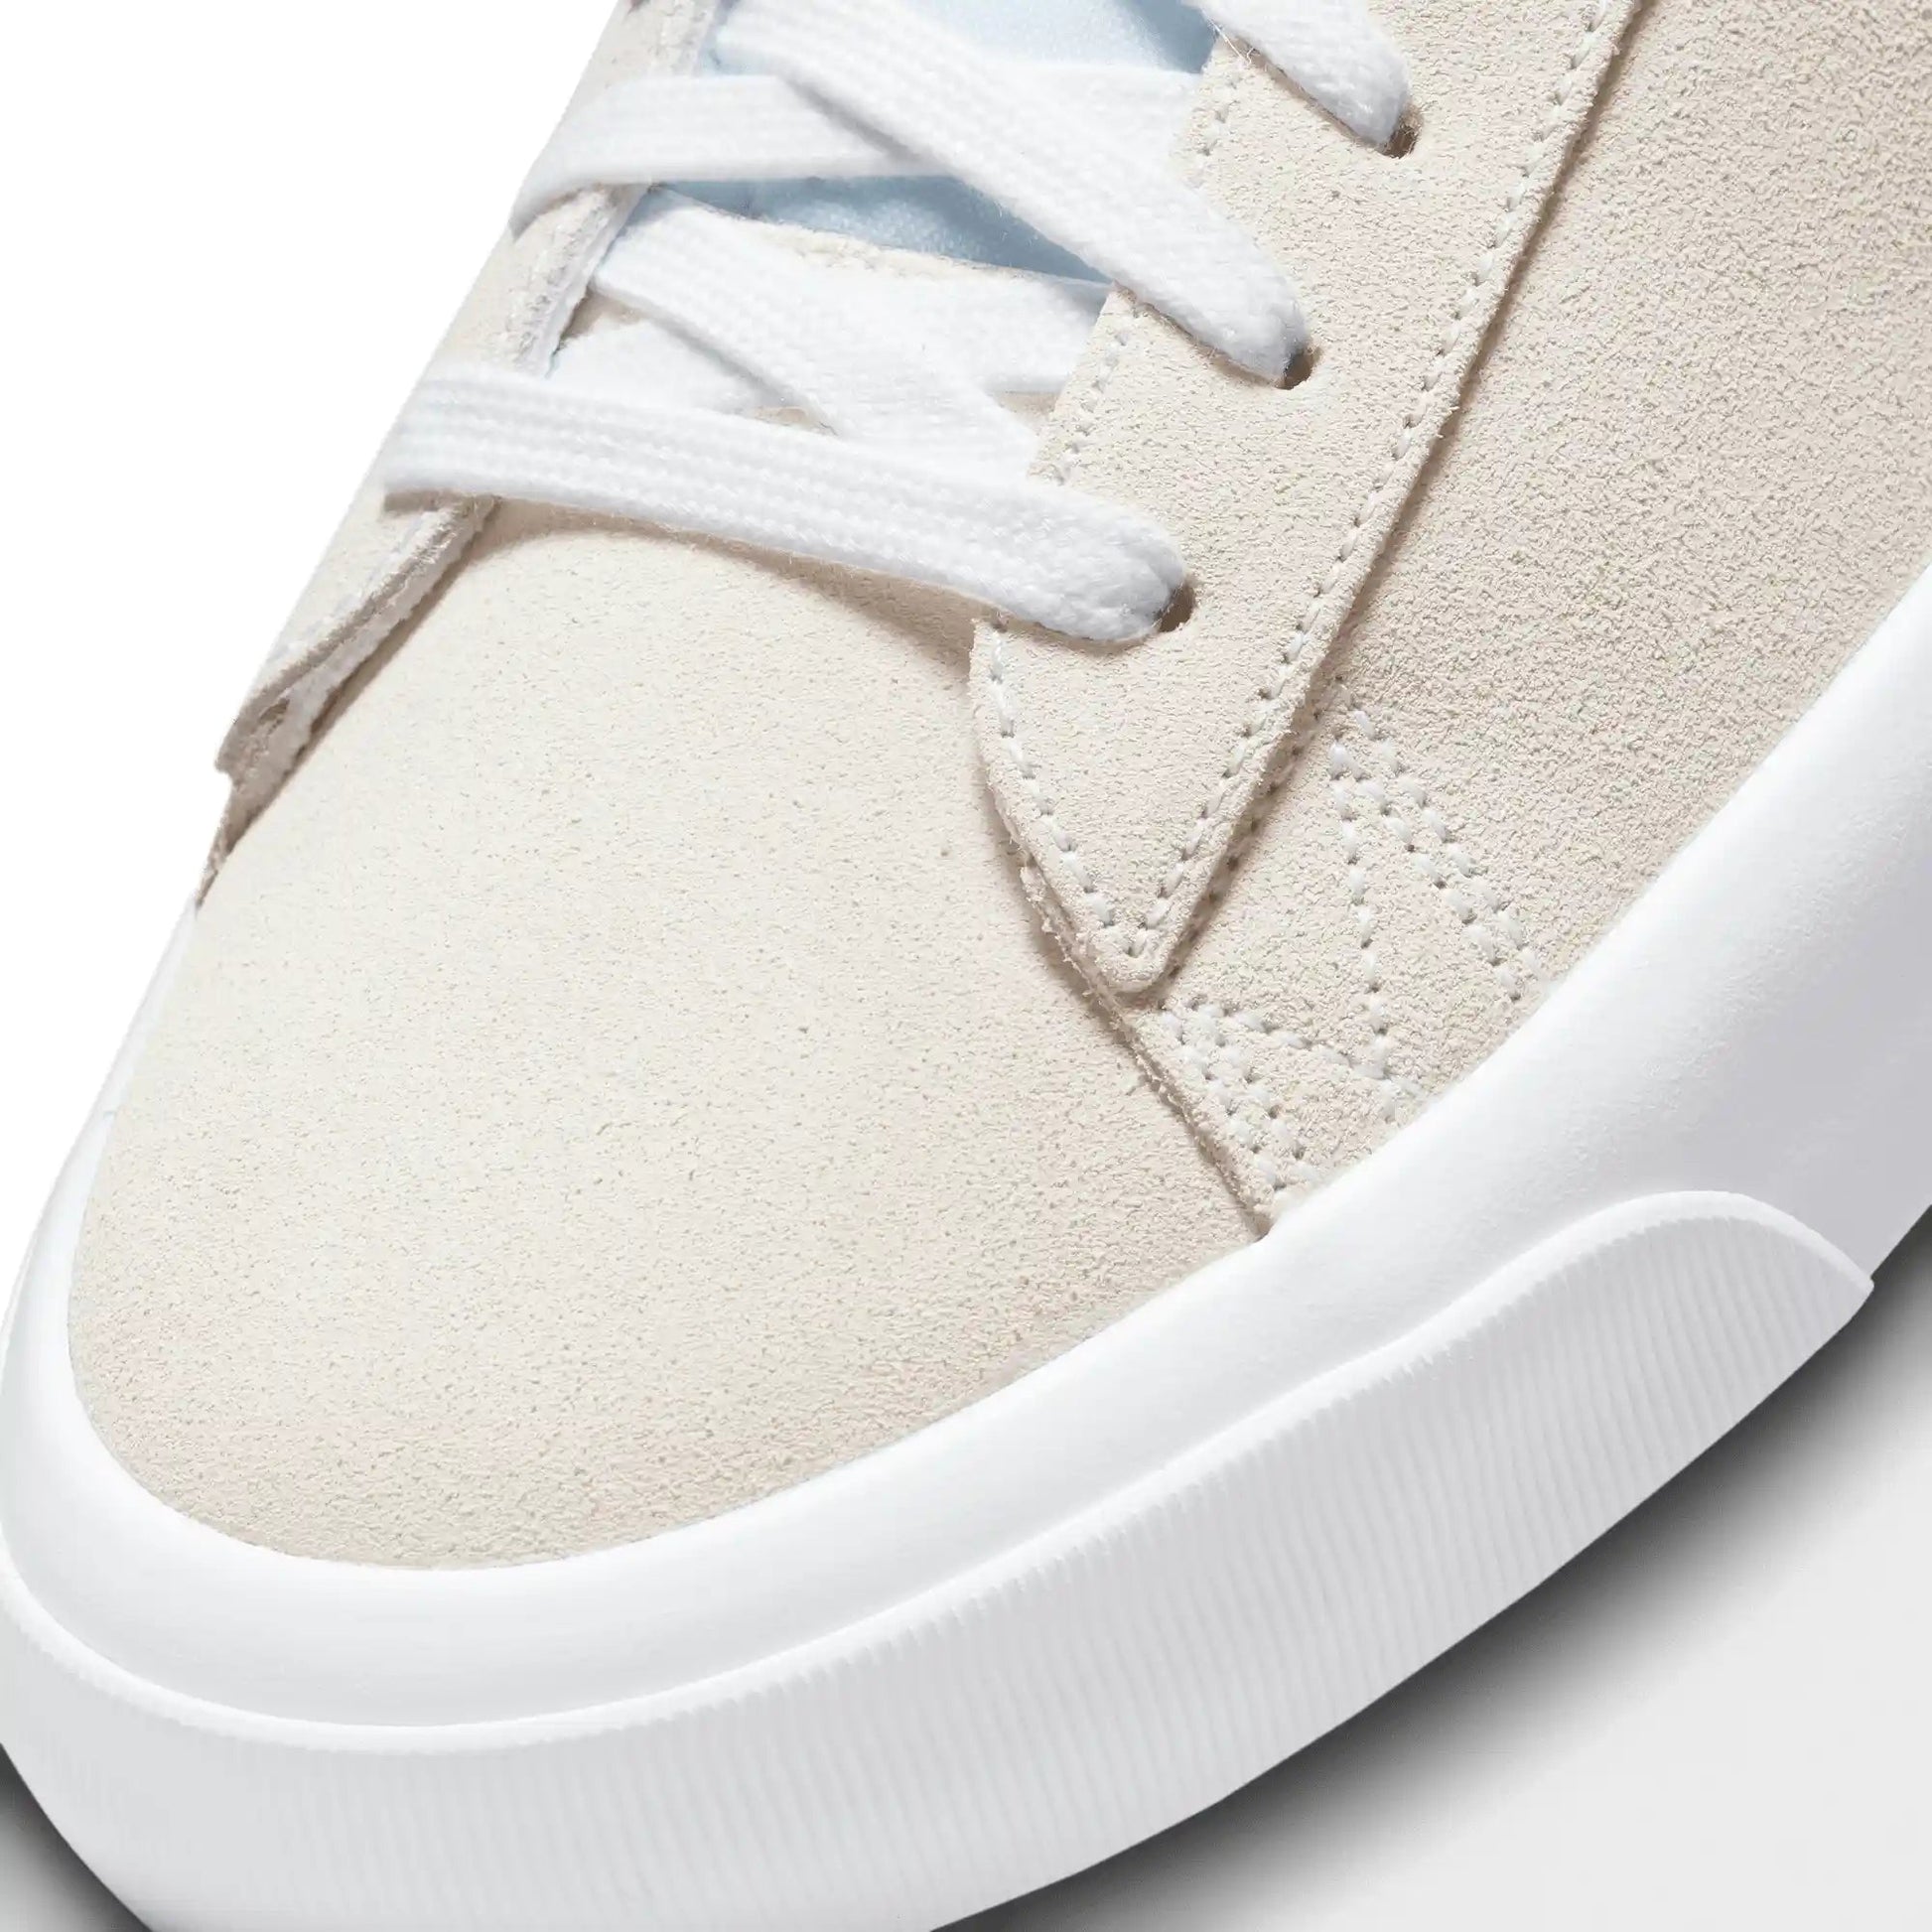 Nike SB Zoom Blazer Low Pro GT, white/fir-white-gum light brown - Tiki Room Skateboards - 11